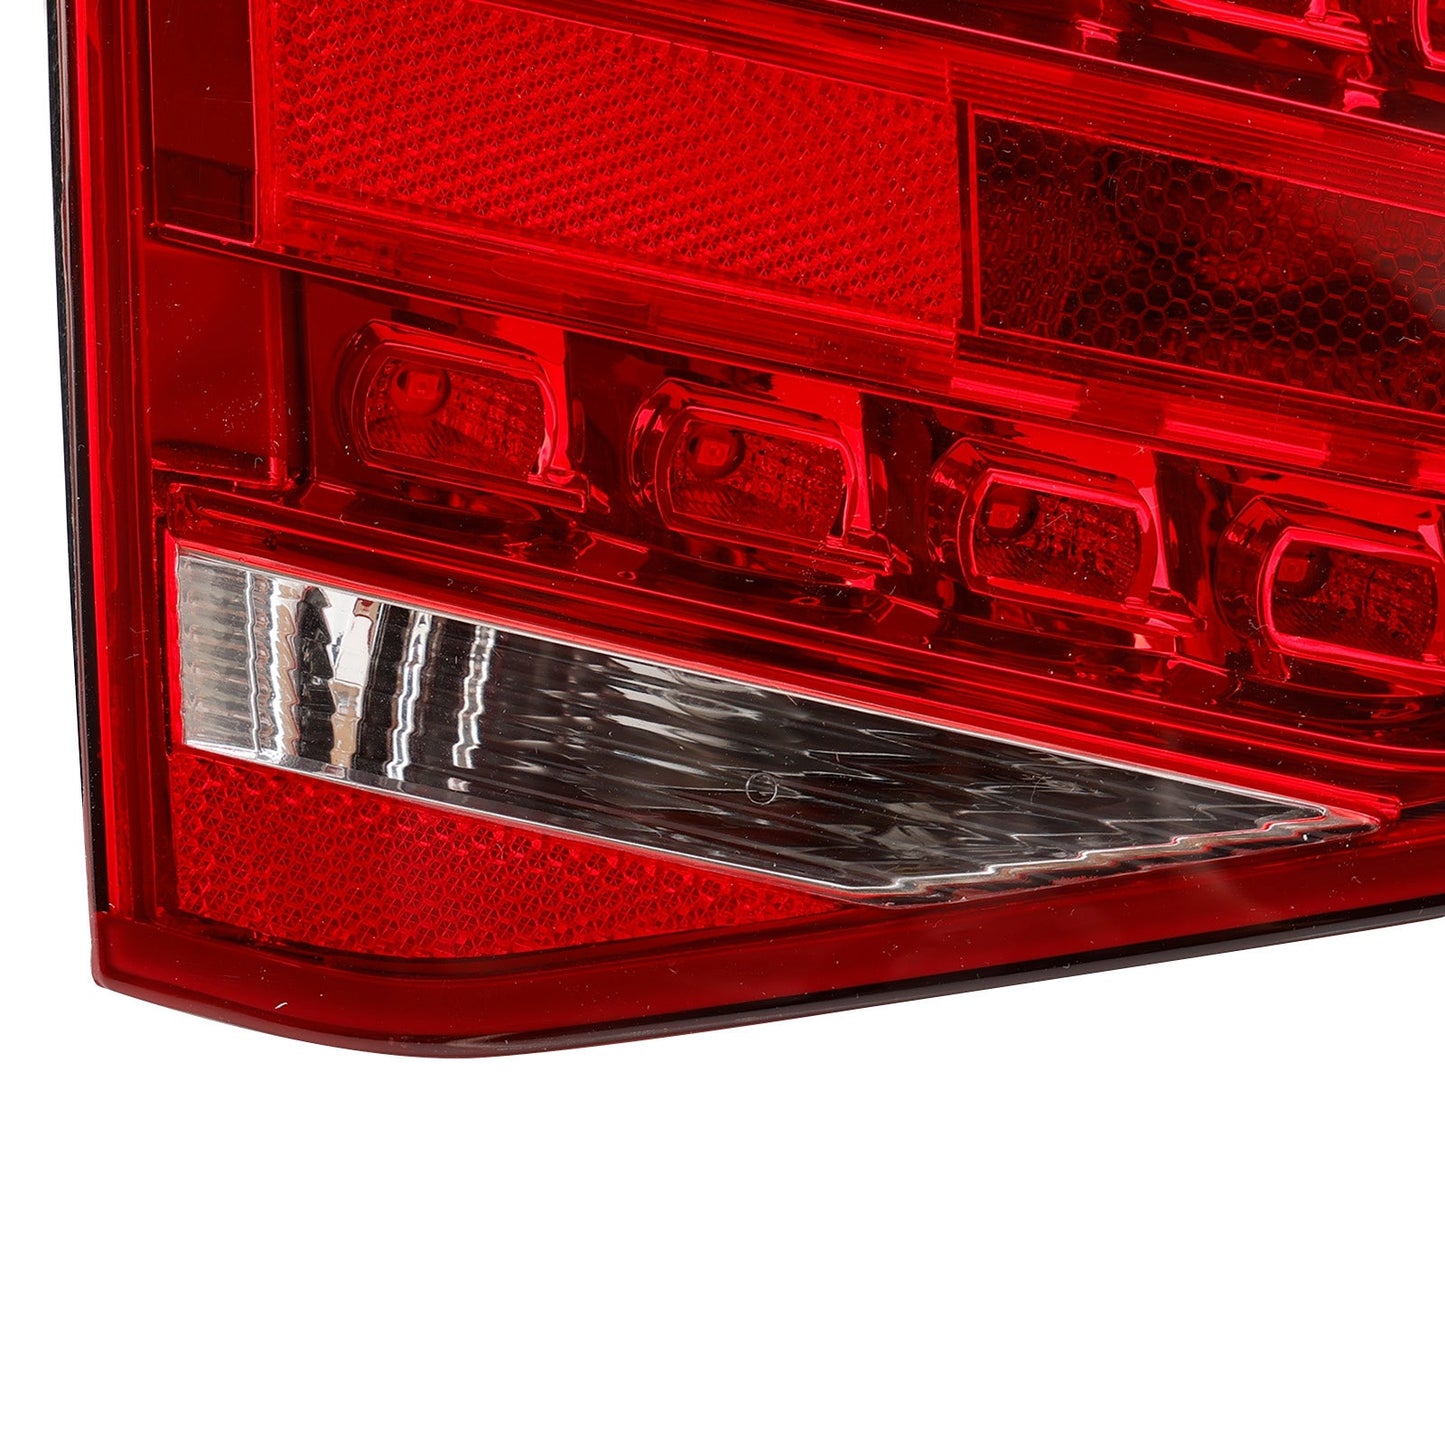 2009-2012 Audi A4 Outer+Inner Trunk LED Tail Light Lamp 4pcs